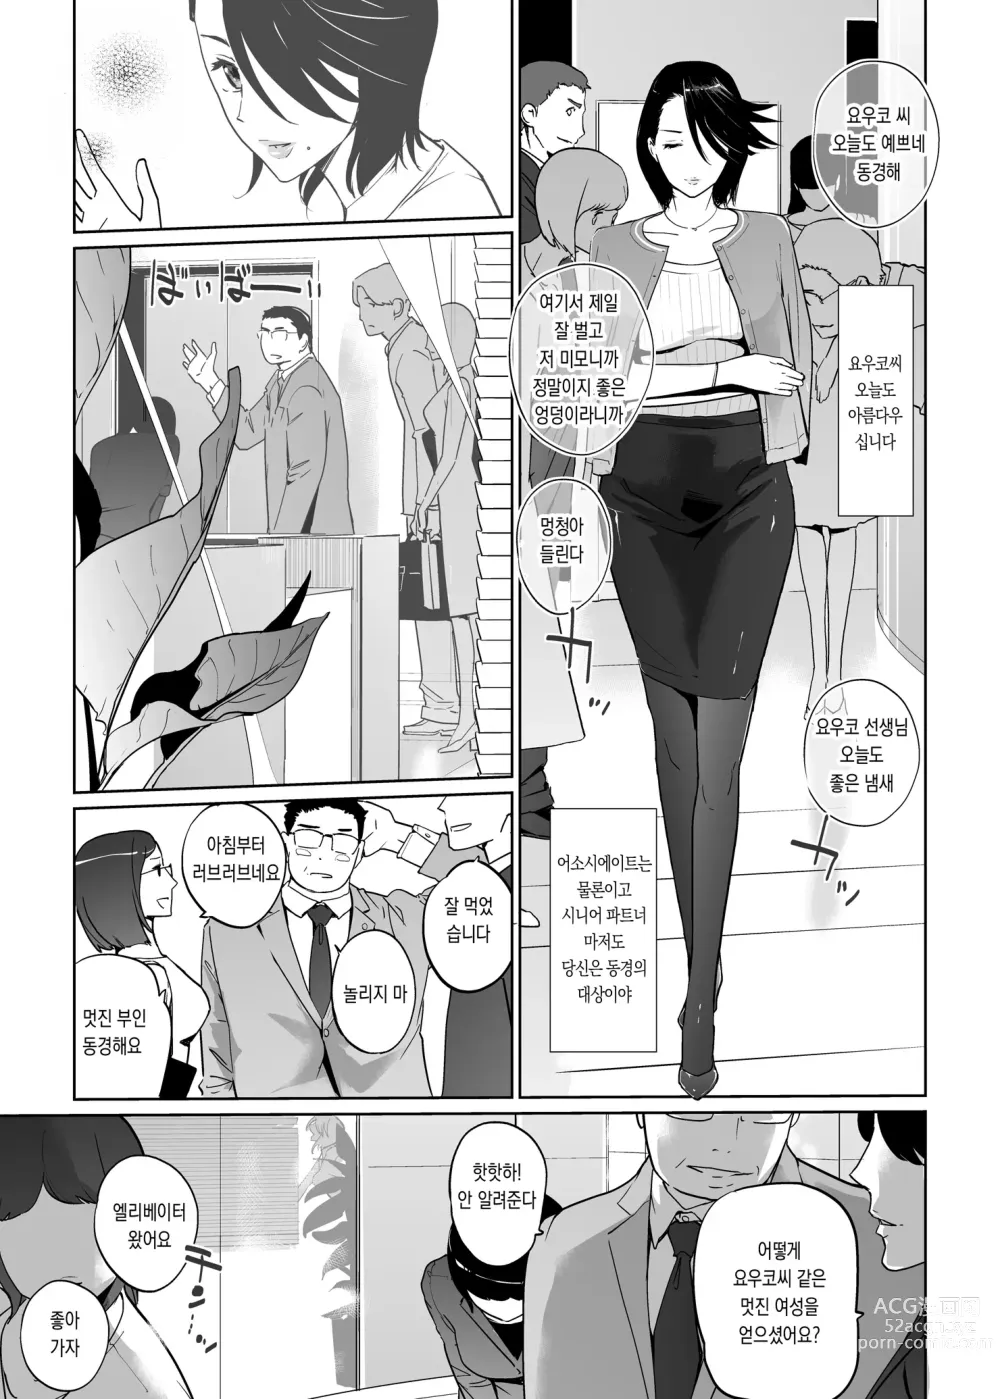 Page 6 of doujinshi NTR 미드나잇 풀 에필로그